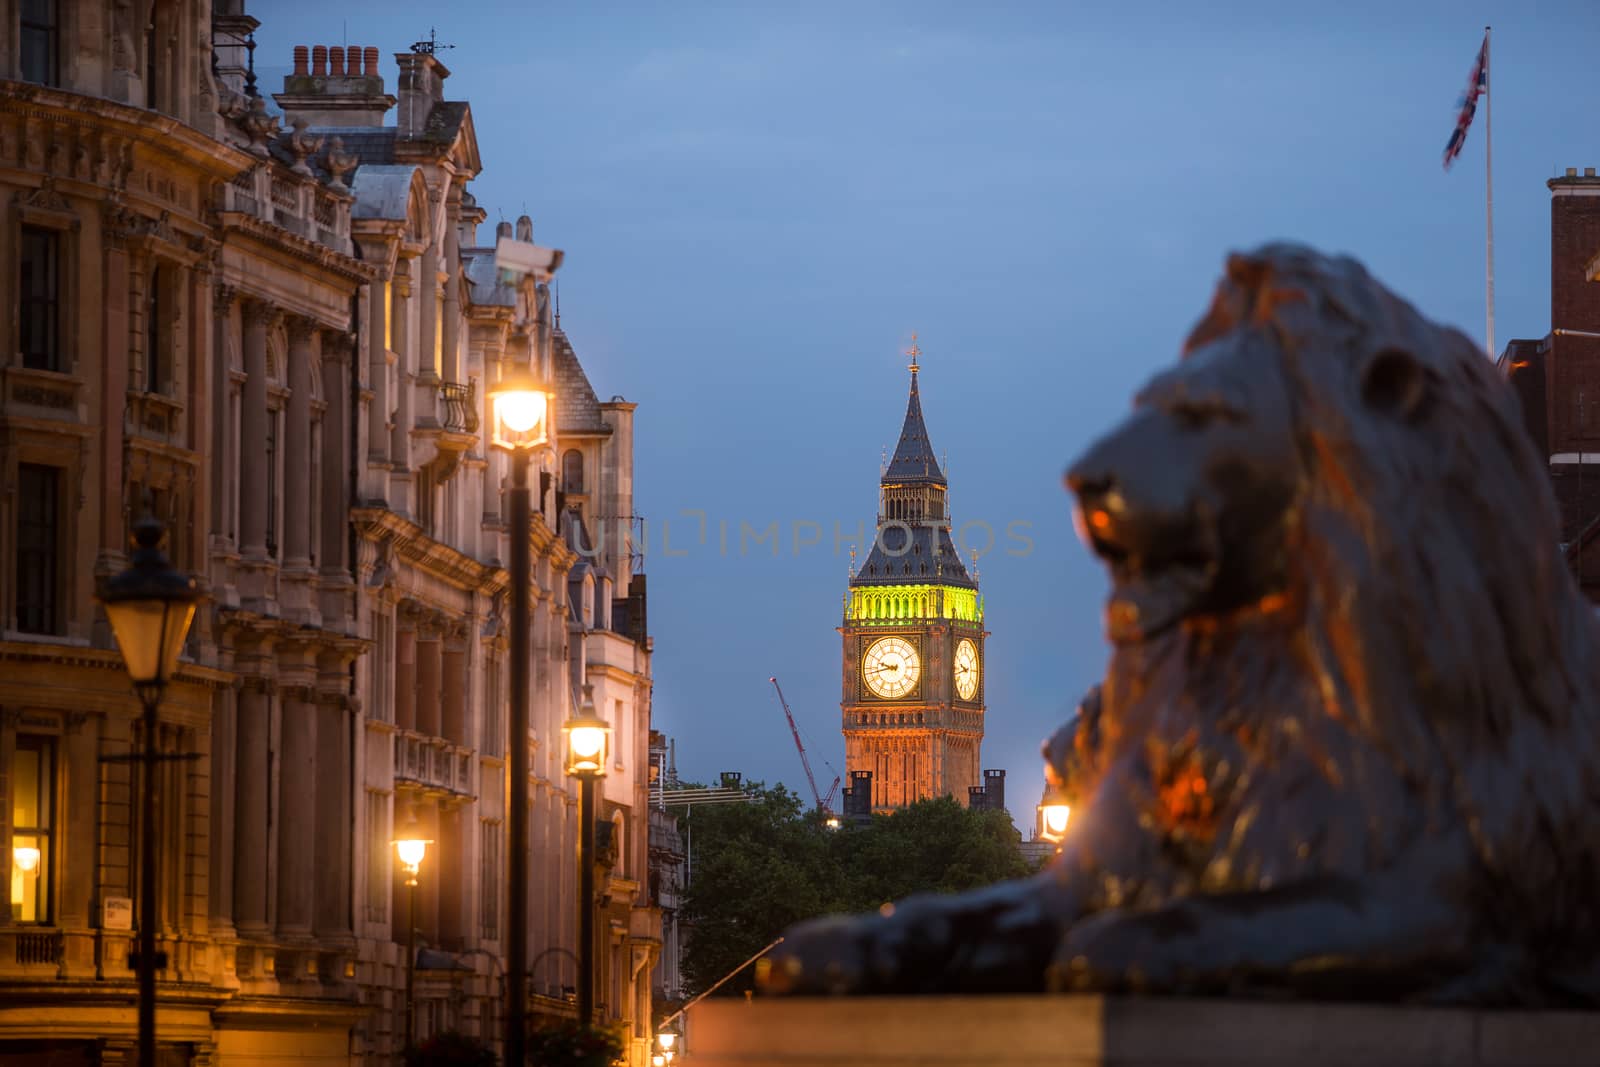 Big Ben and Trafalgar square, London, by Alicephoto